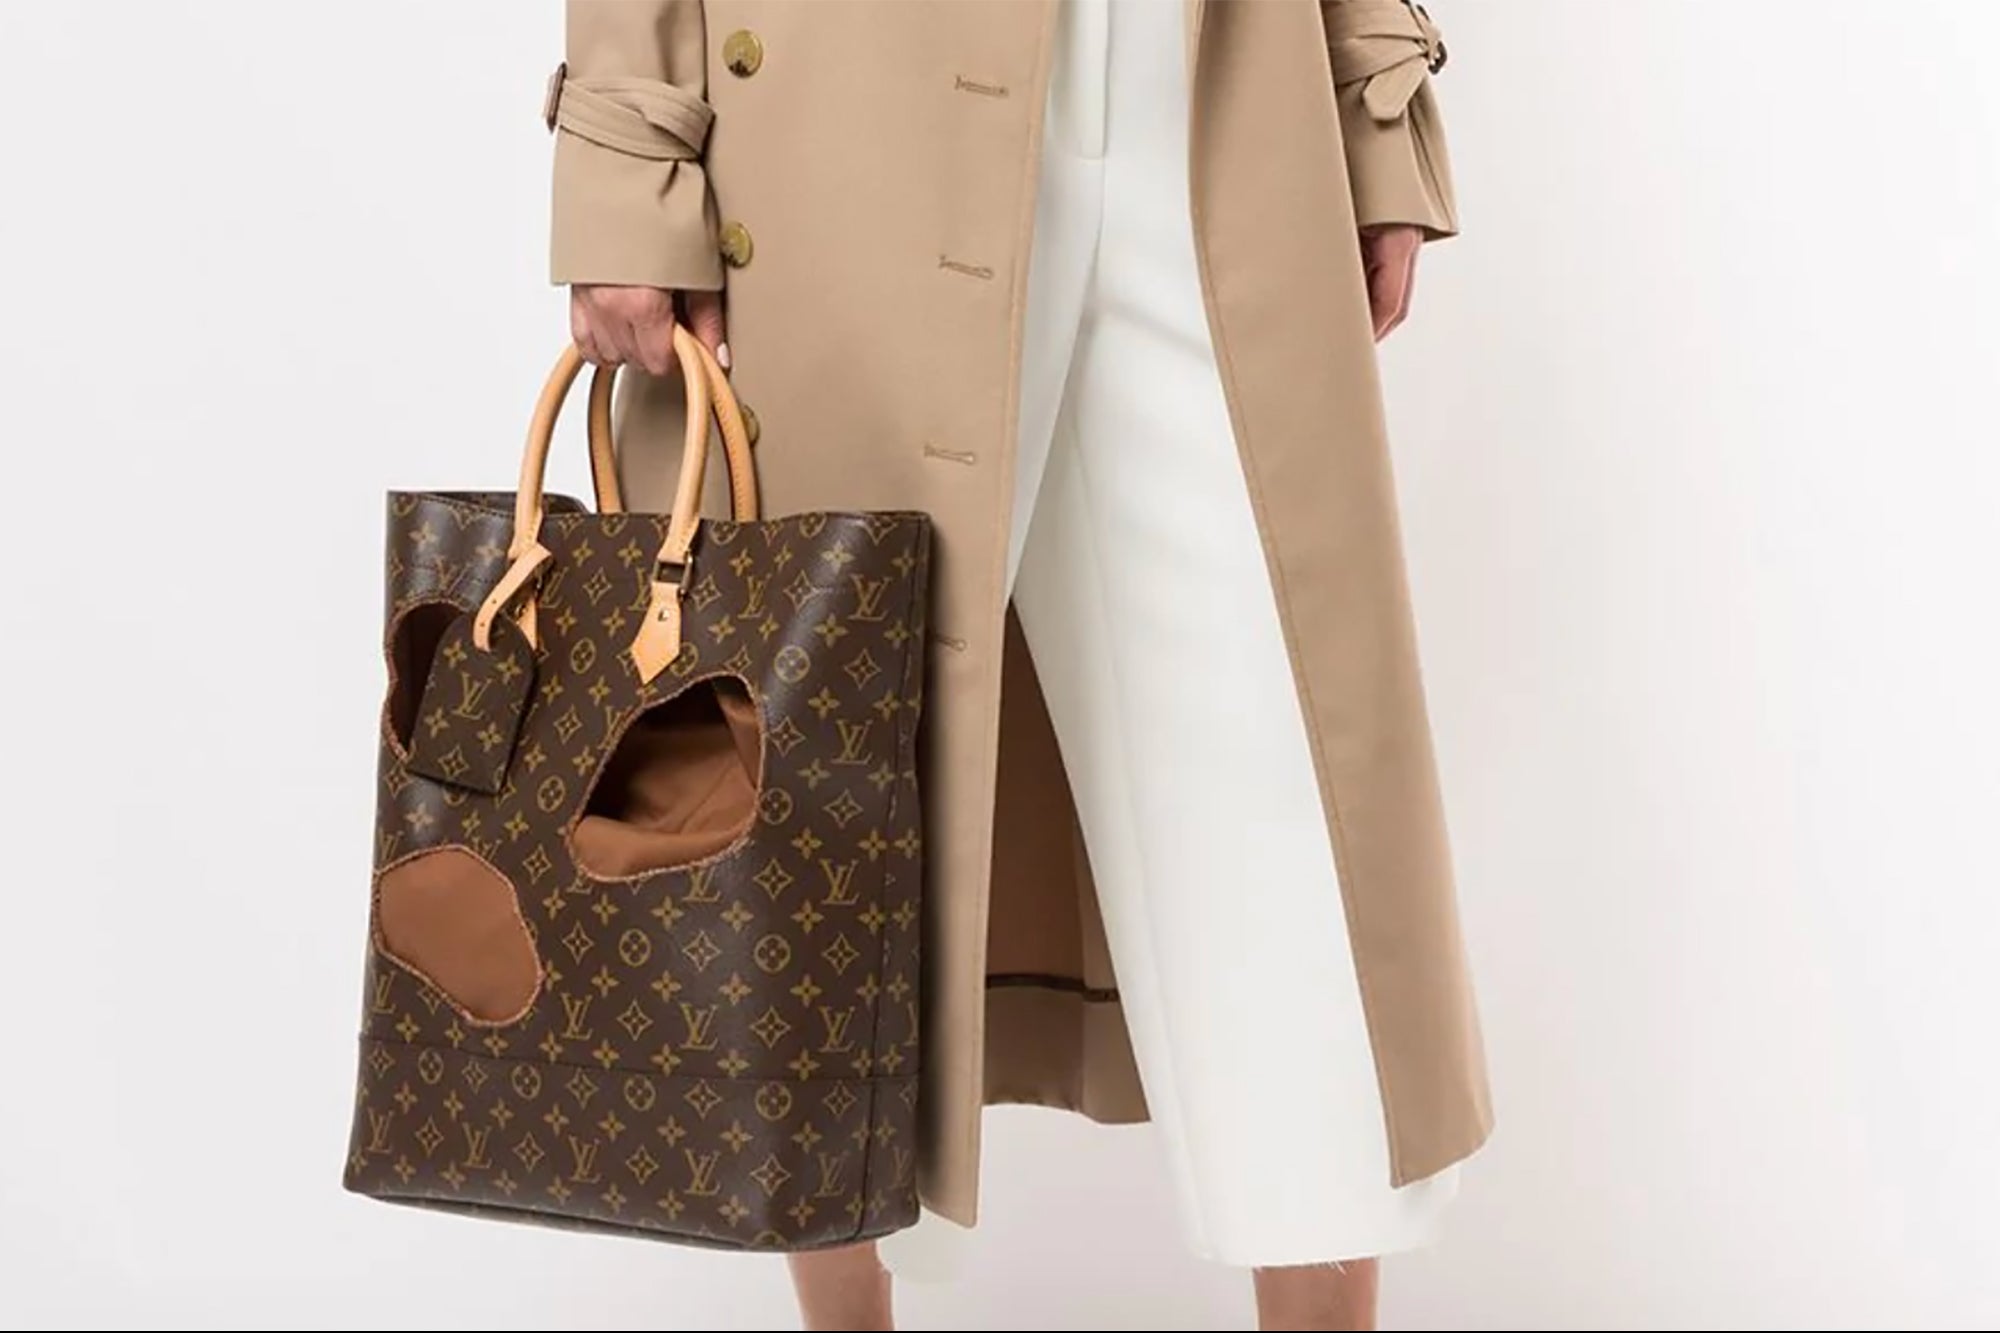 Preowned  Second hand Louis Vuitton Handbags